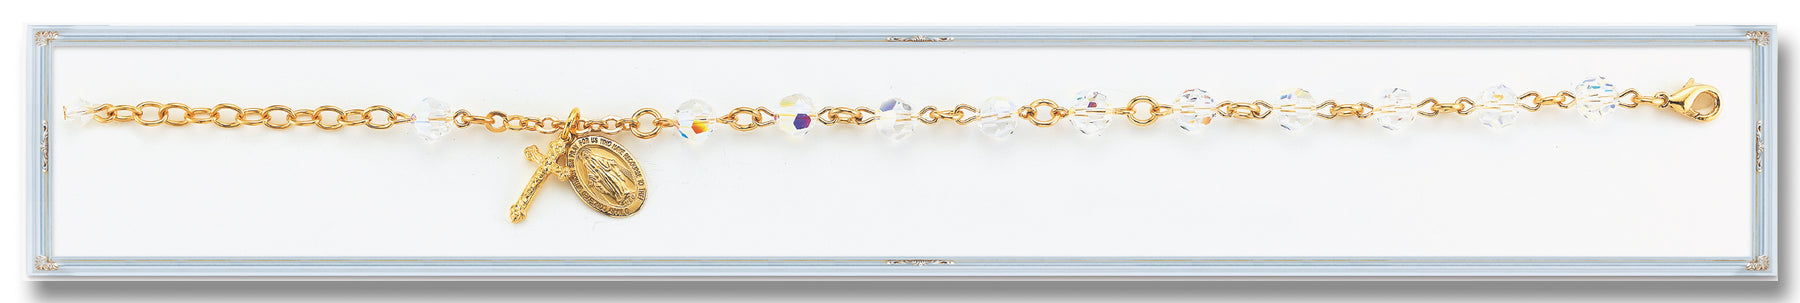 5mm Gold Plated Swarovski Crystal Bracelet